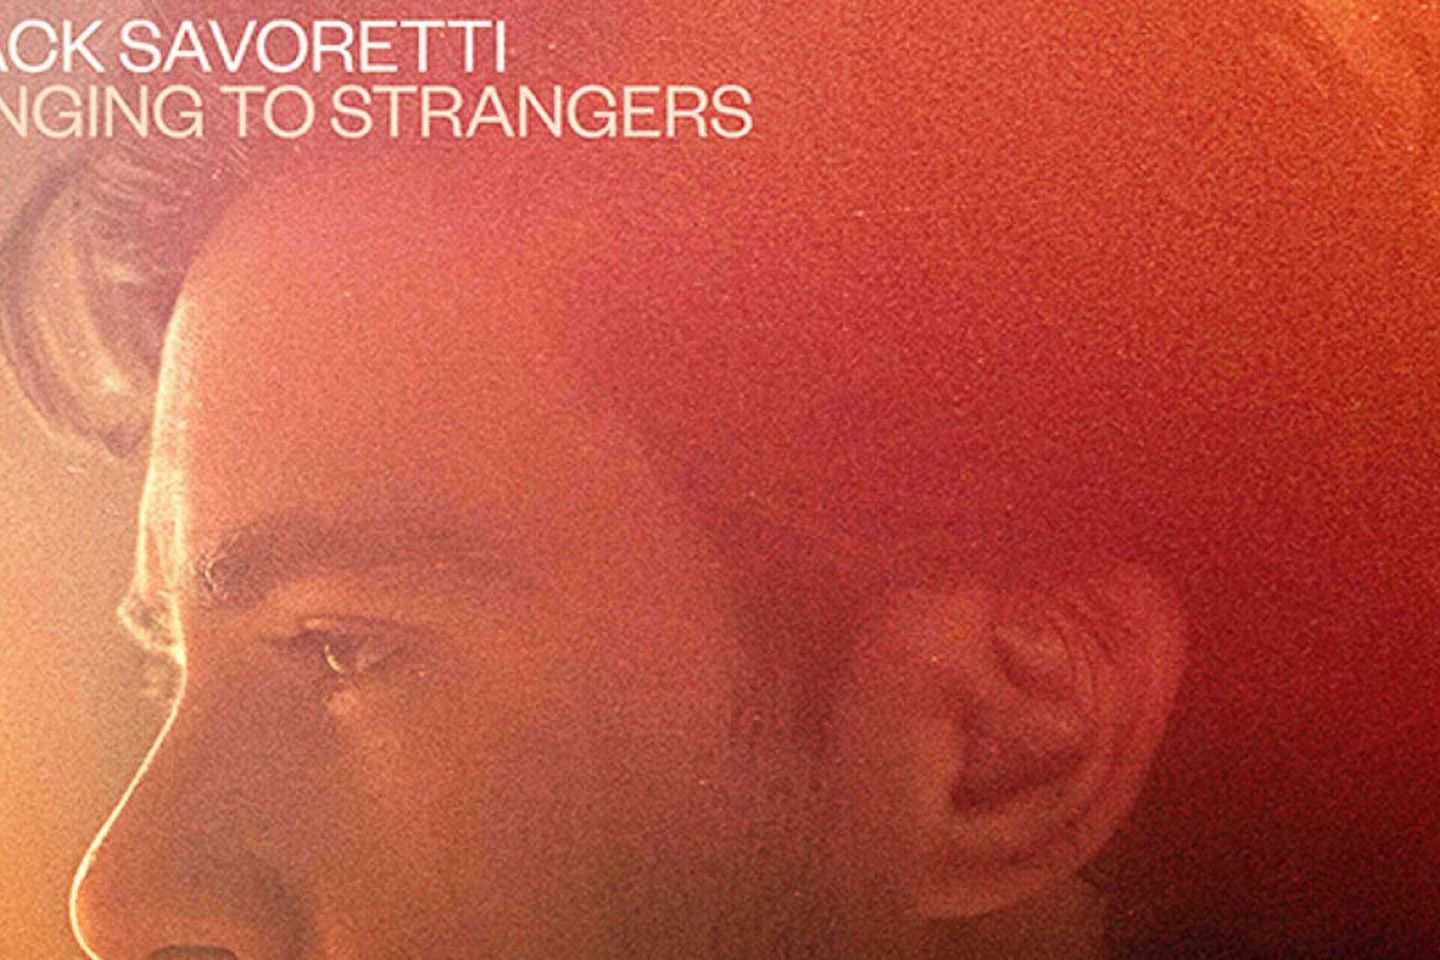 Jack Savoretti “Singing to Strangers” (BMG, 2019)